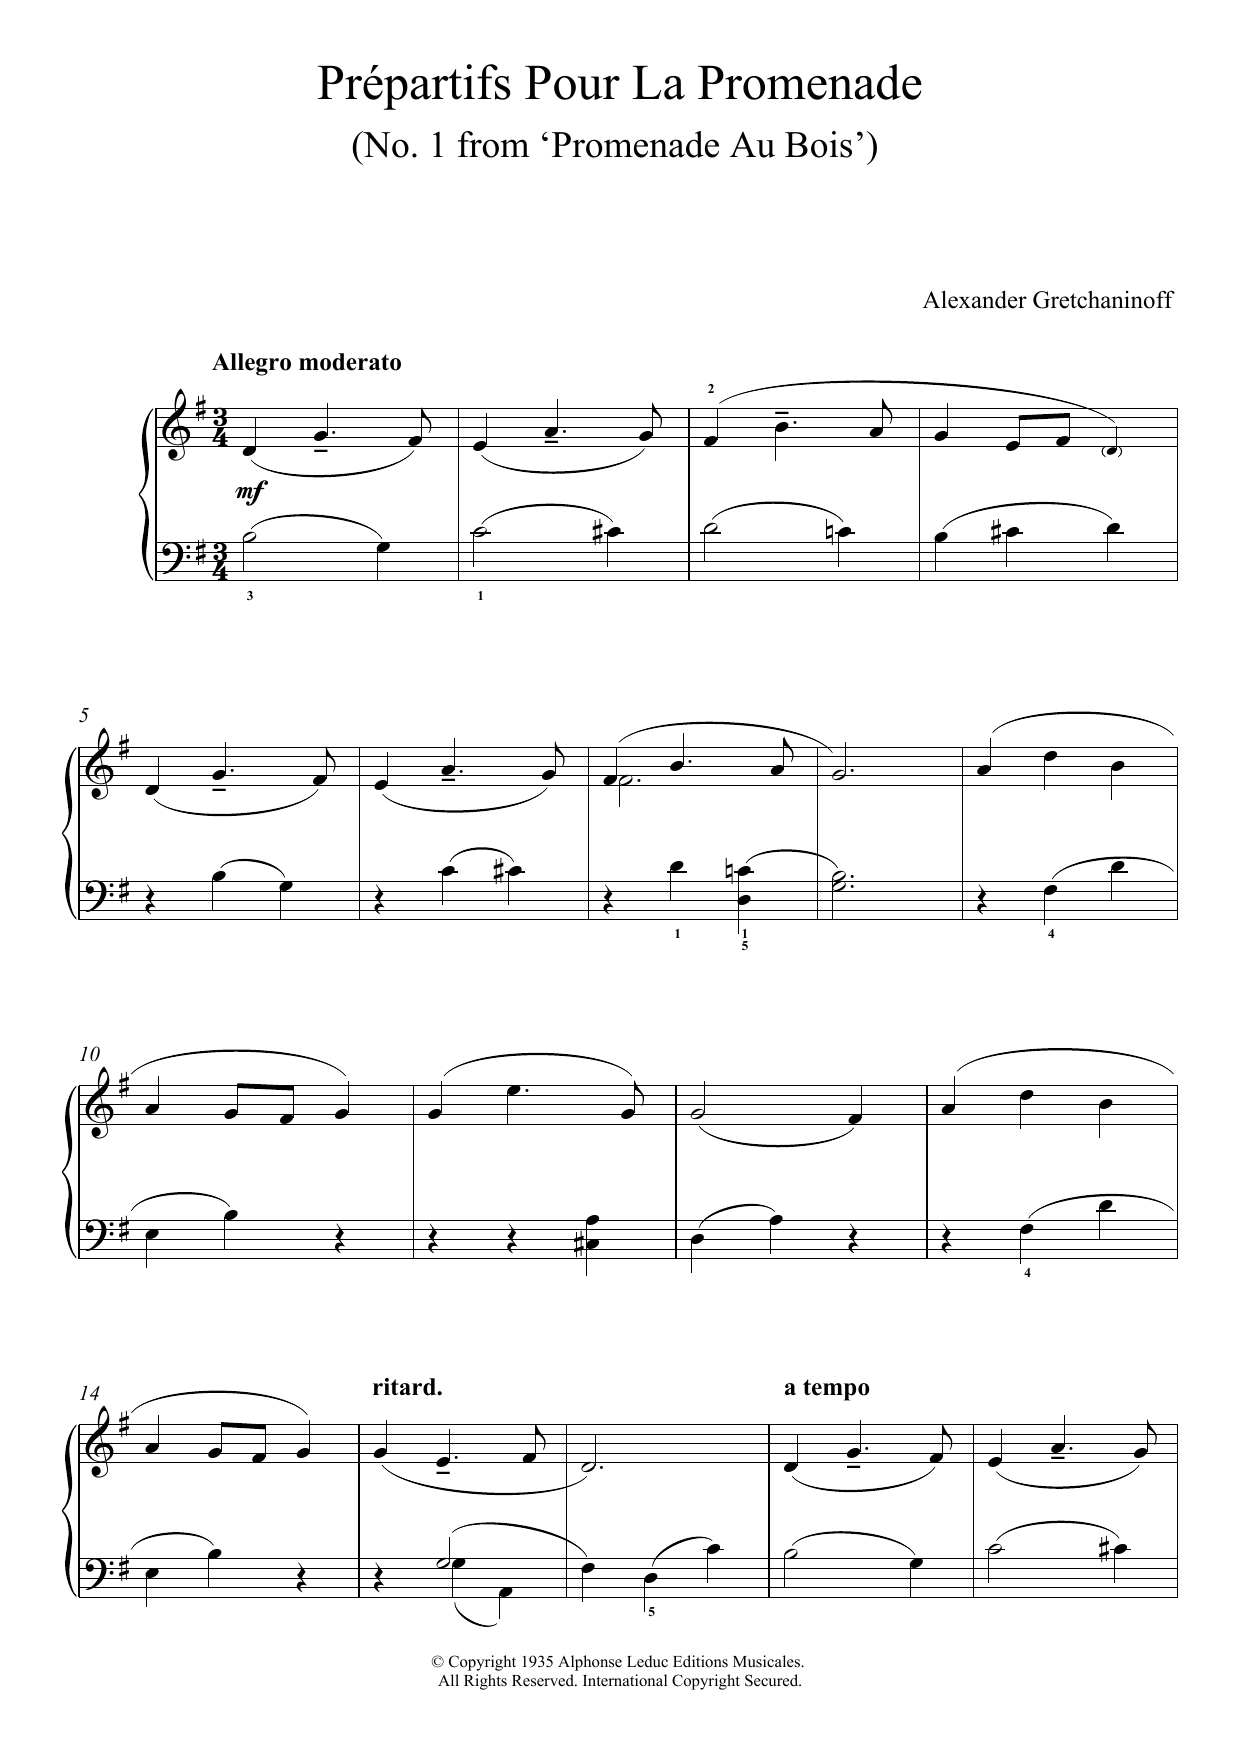 Alexander Gretchaninoff Prepartifs Pour La Promenade (No. 1 From 'Promenade Au Bois') Sheet Music Notes & Chords for Piano - Download or Print PDF